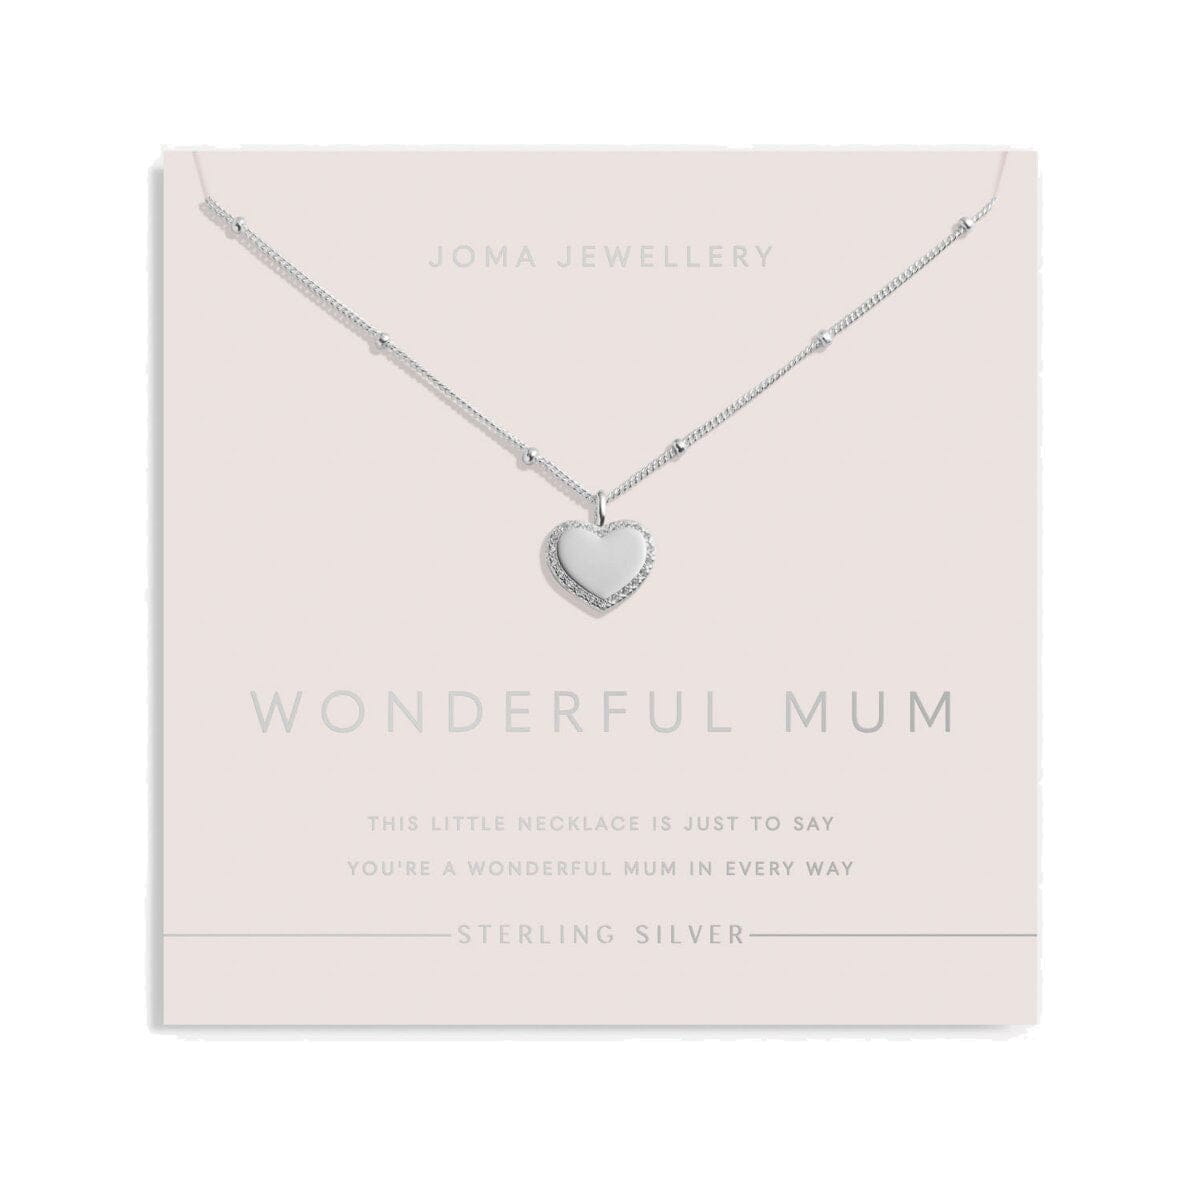 Joma Jewellery Necklace Joma Jewellery Sterling Silver Necklace - Wonderful Mum